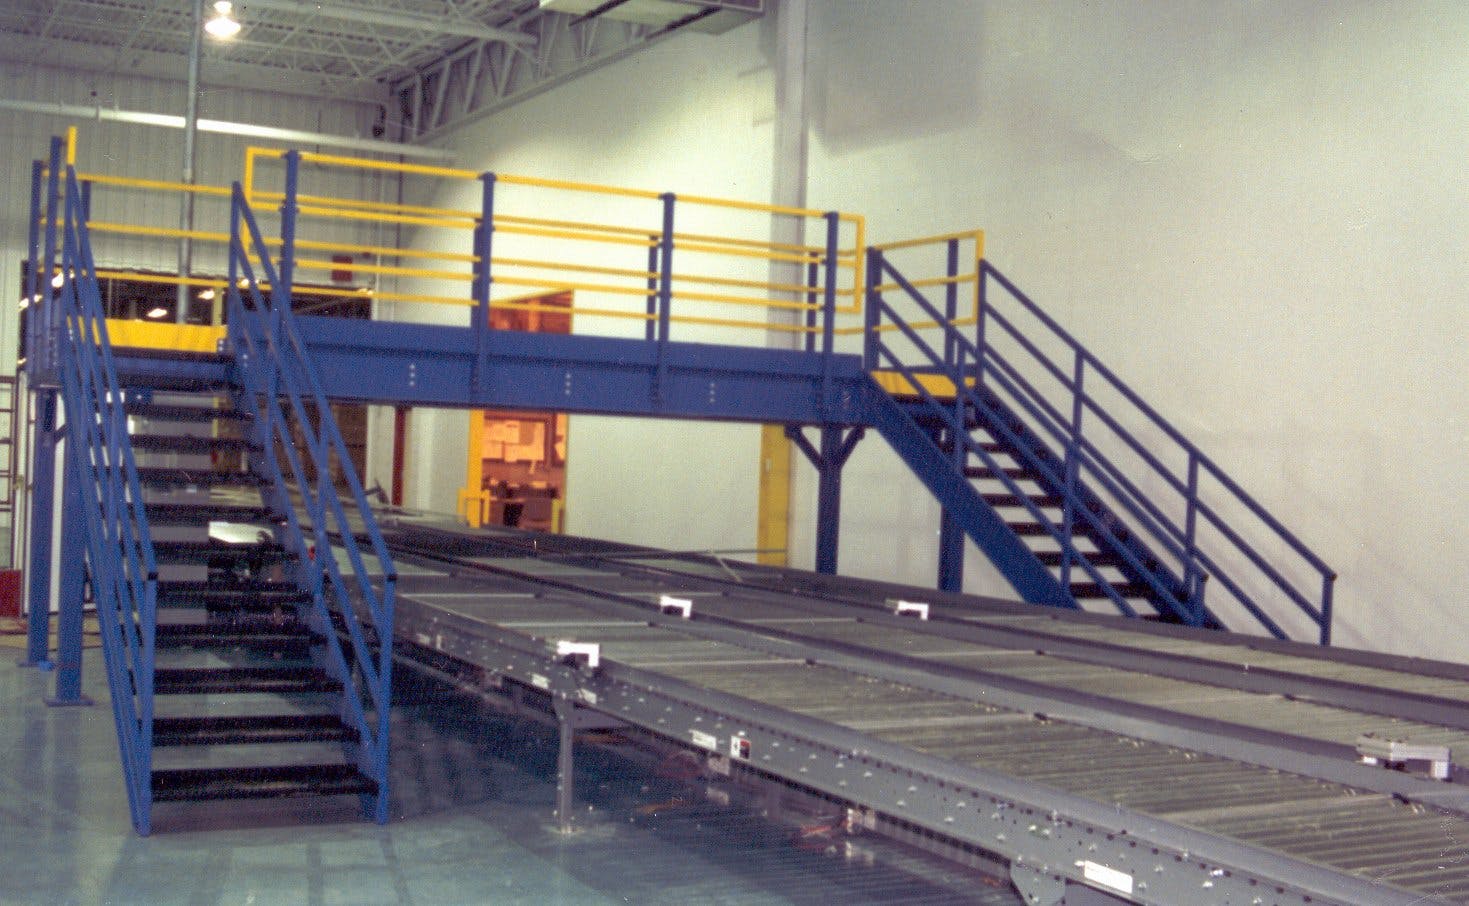 Blue crossover catwalk with OSHA yellow safety handrails above grey shipping conveyor belt